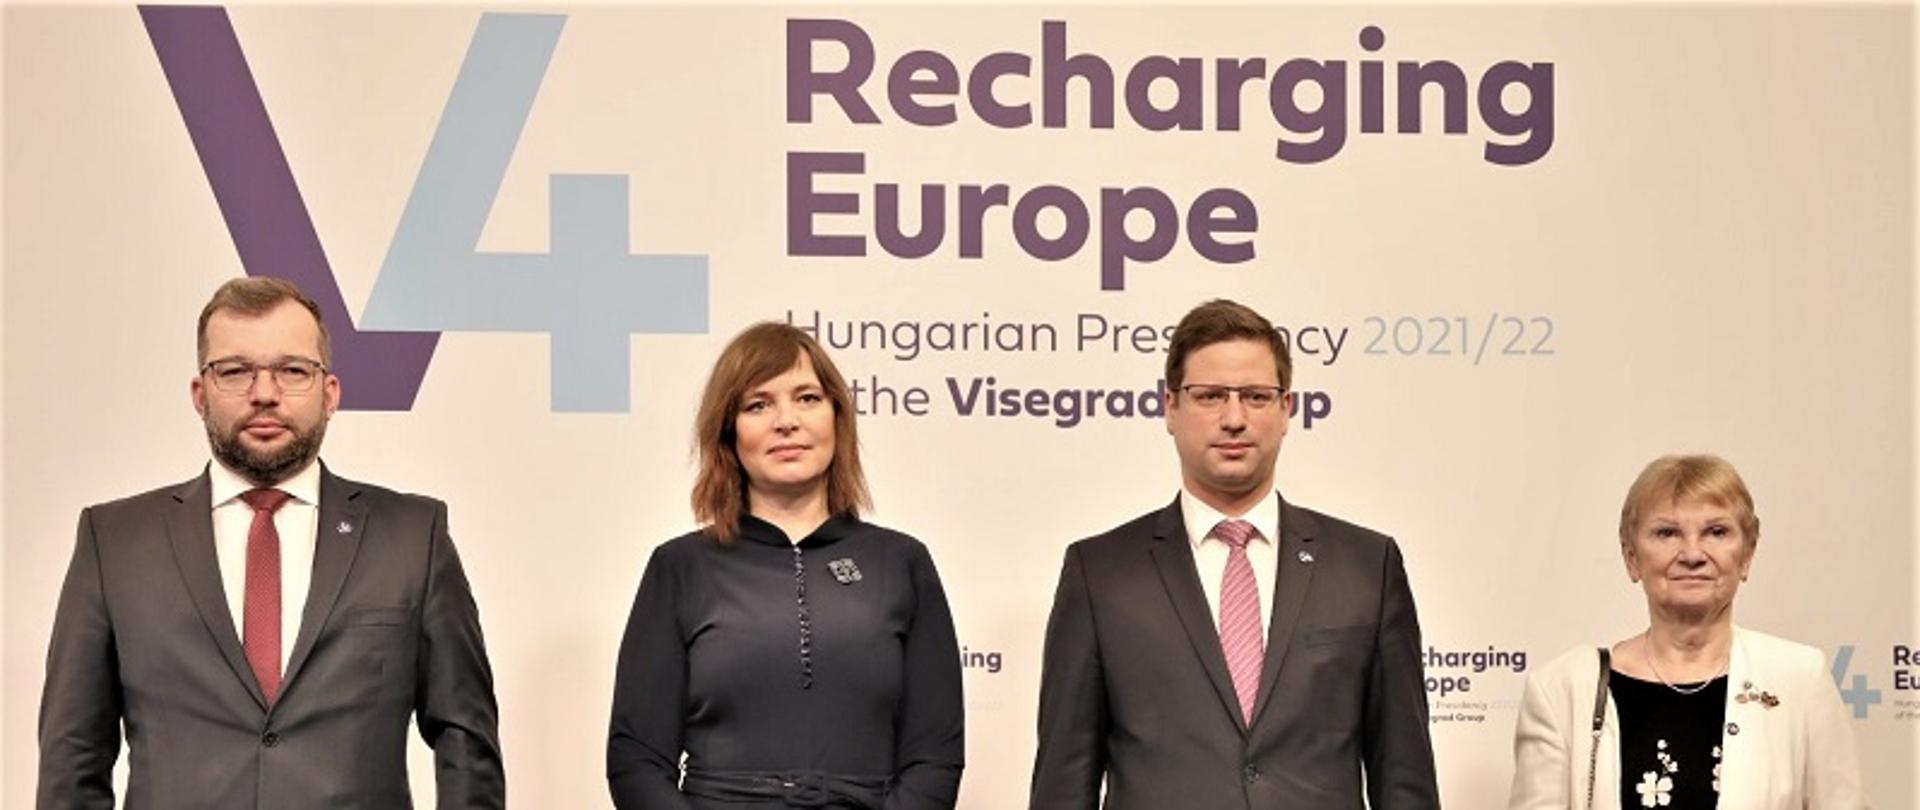 Cztery osoby stoją na ściance z napisem V4 Recharging Europe. 